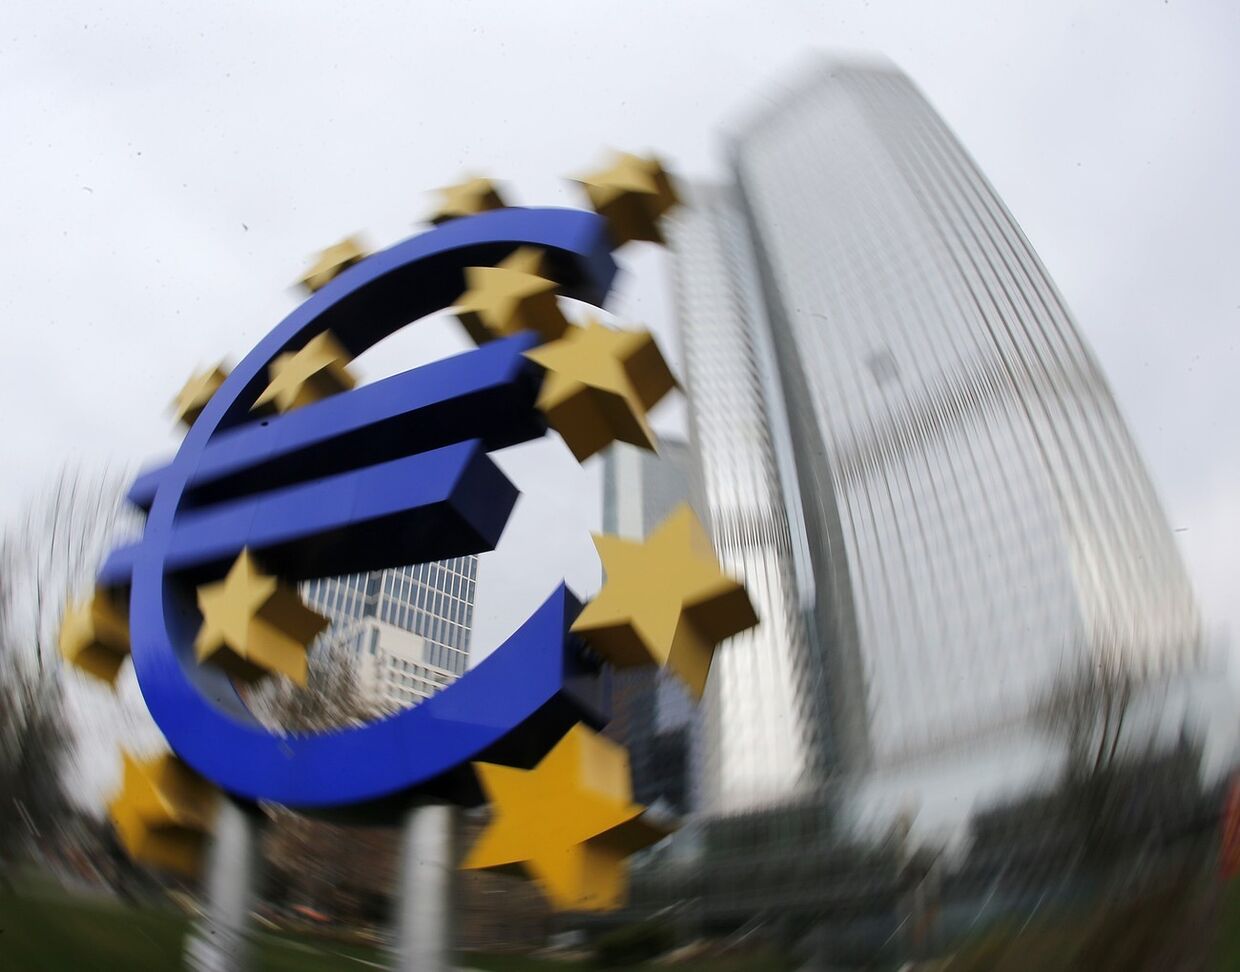 Скульптура евро перед зданием Европейского центрального банка во Франкфурте-на-Майне